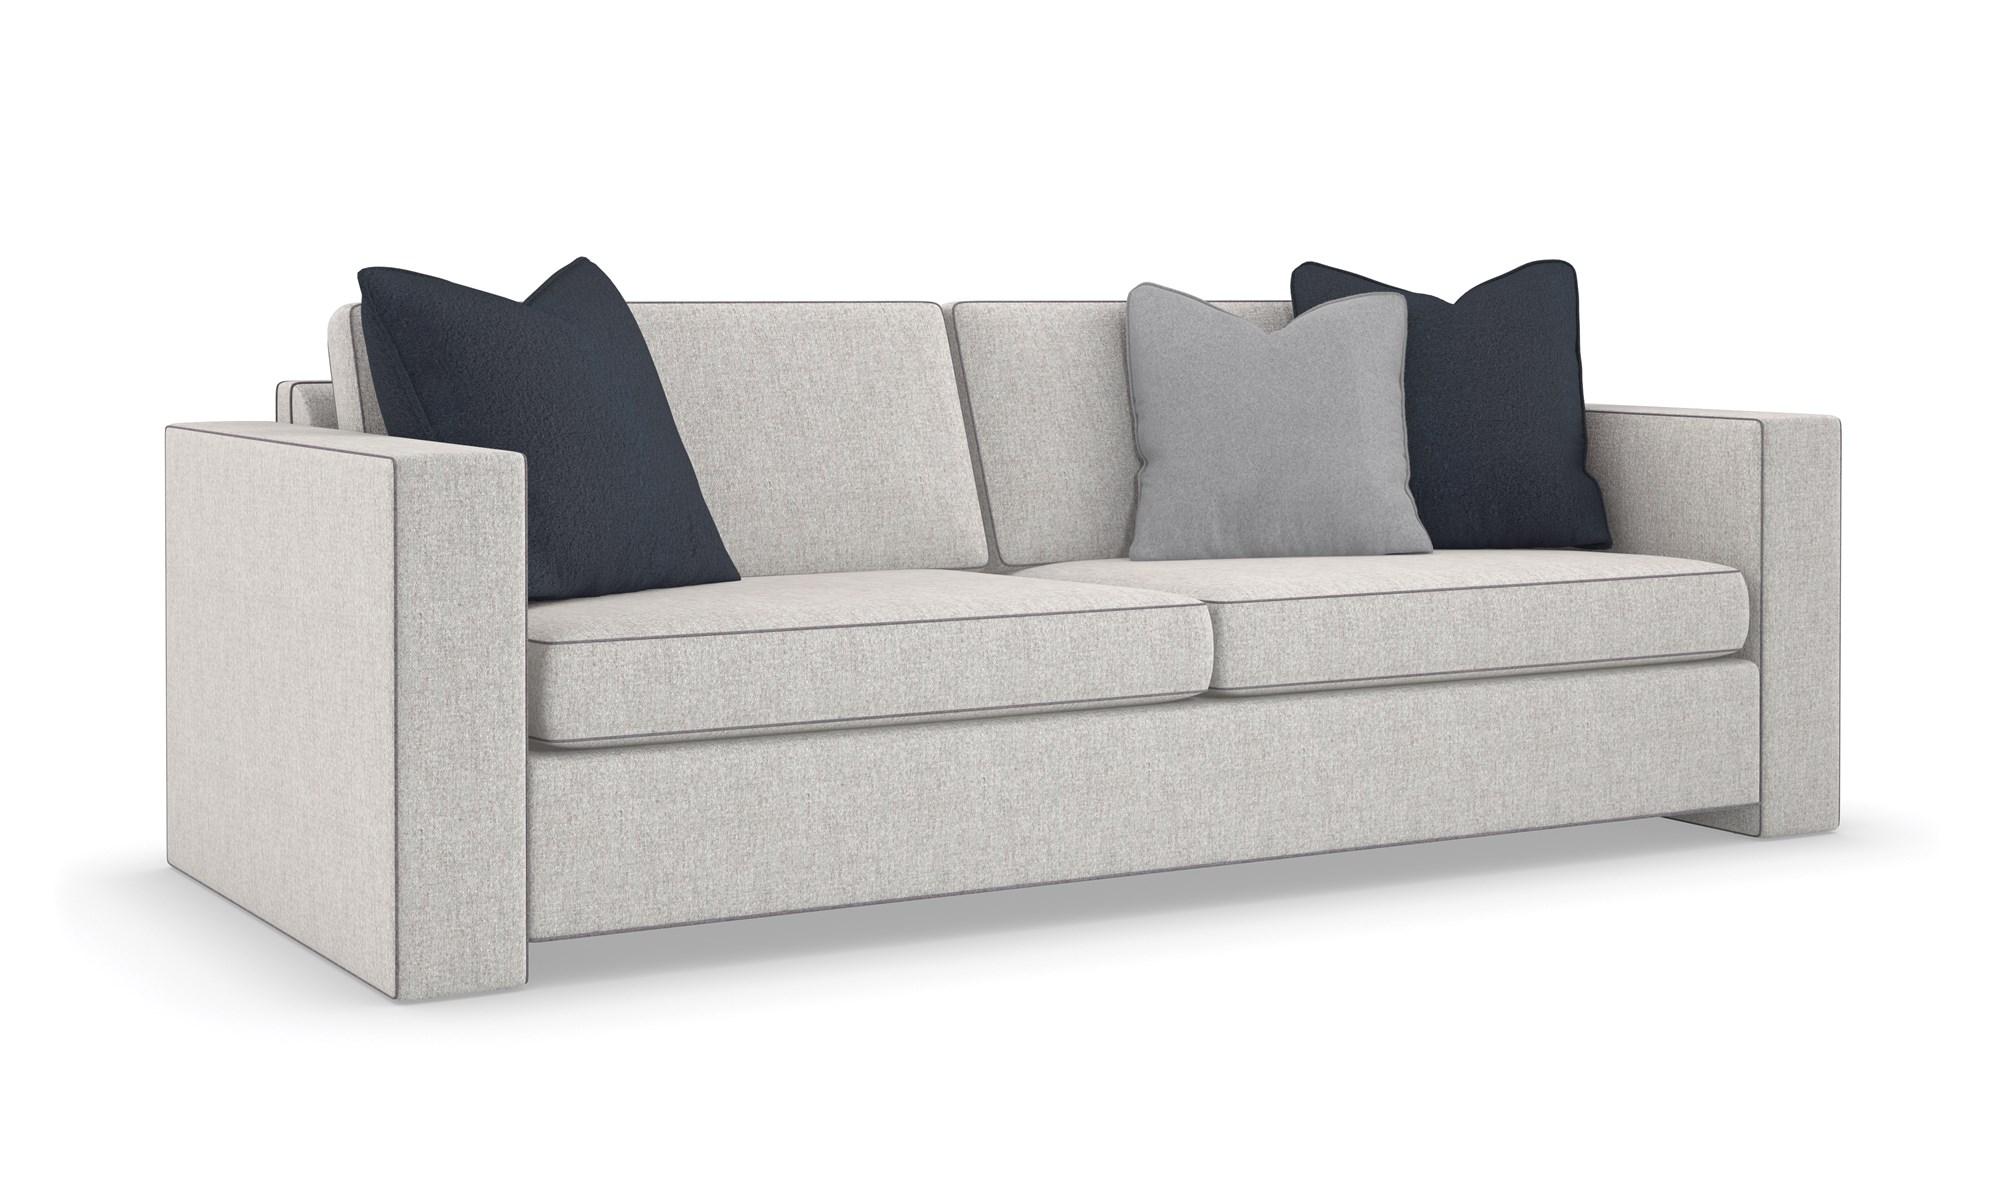 Contemporary Sofa Sleeper WELT PLAYED SLEEPER UPH-019-017-C in Smoke Fabric